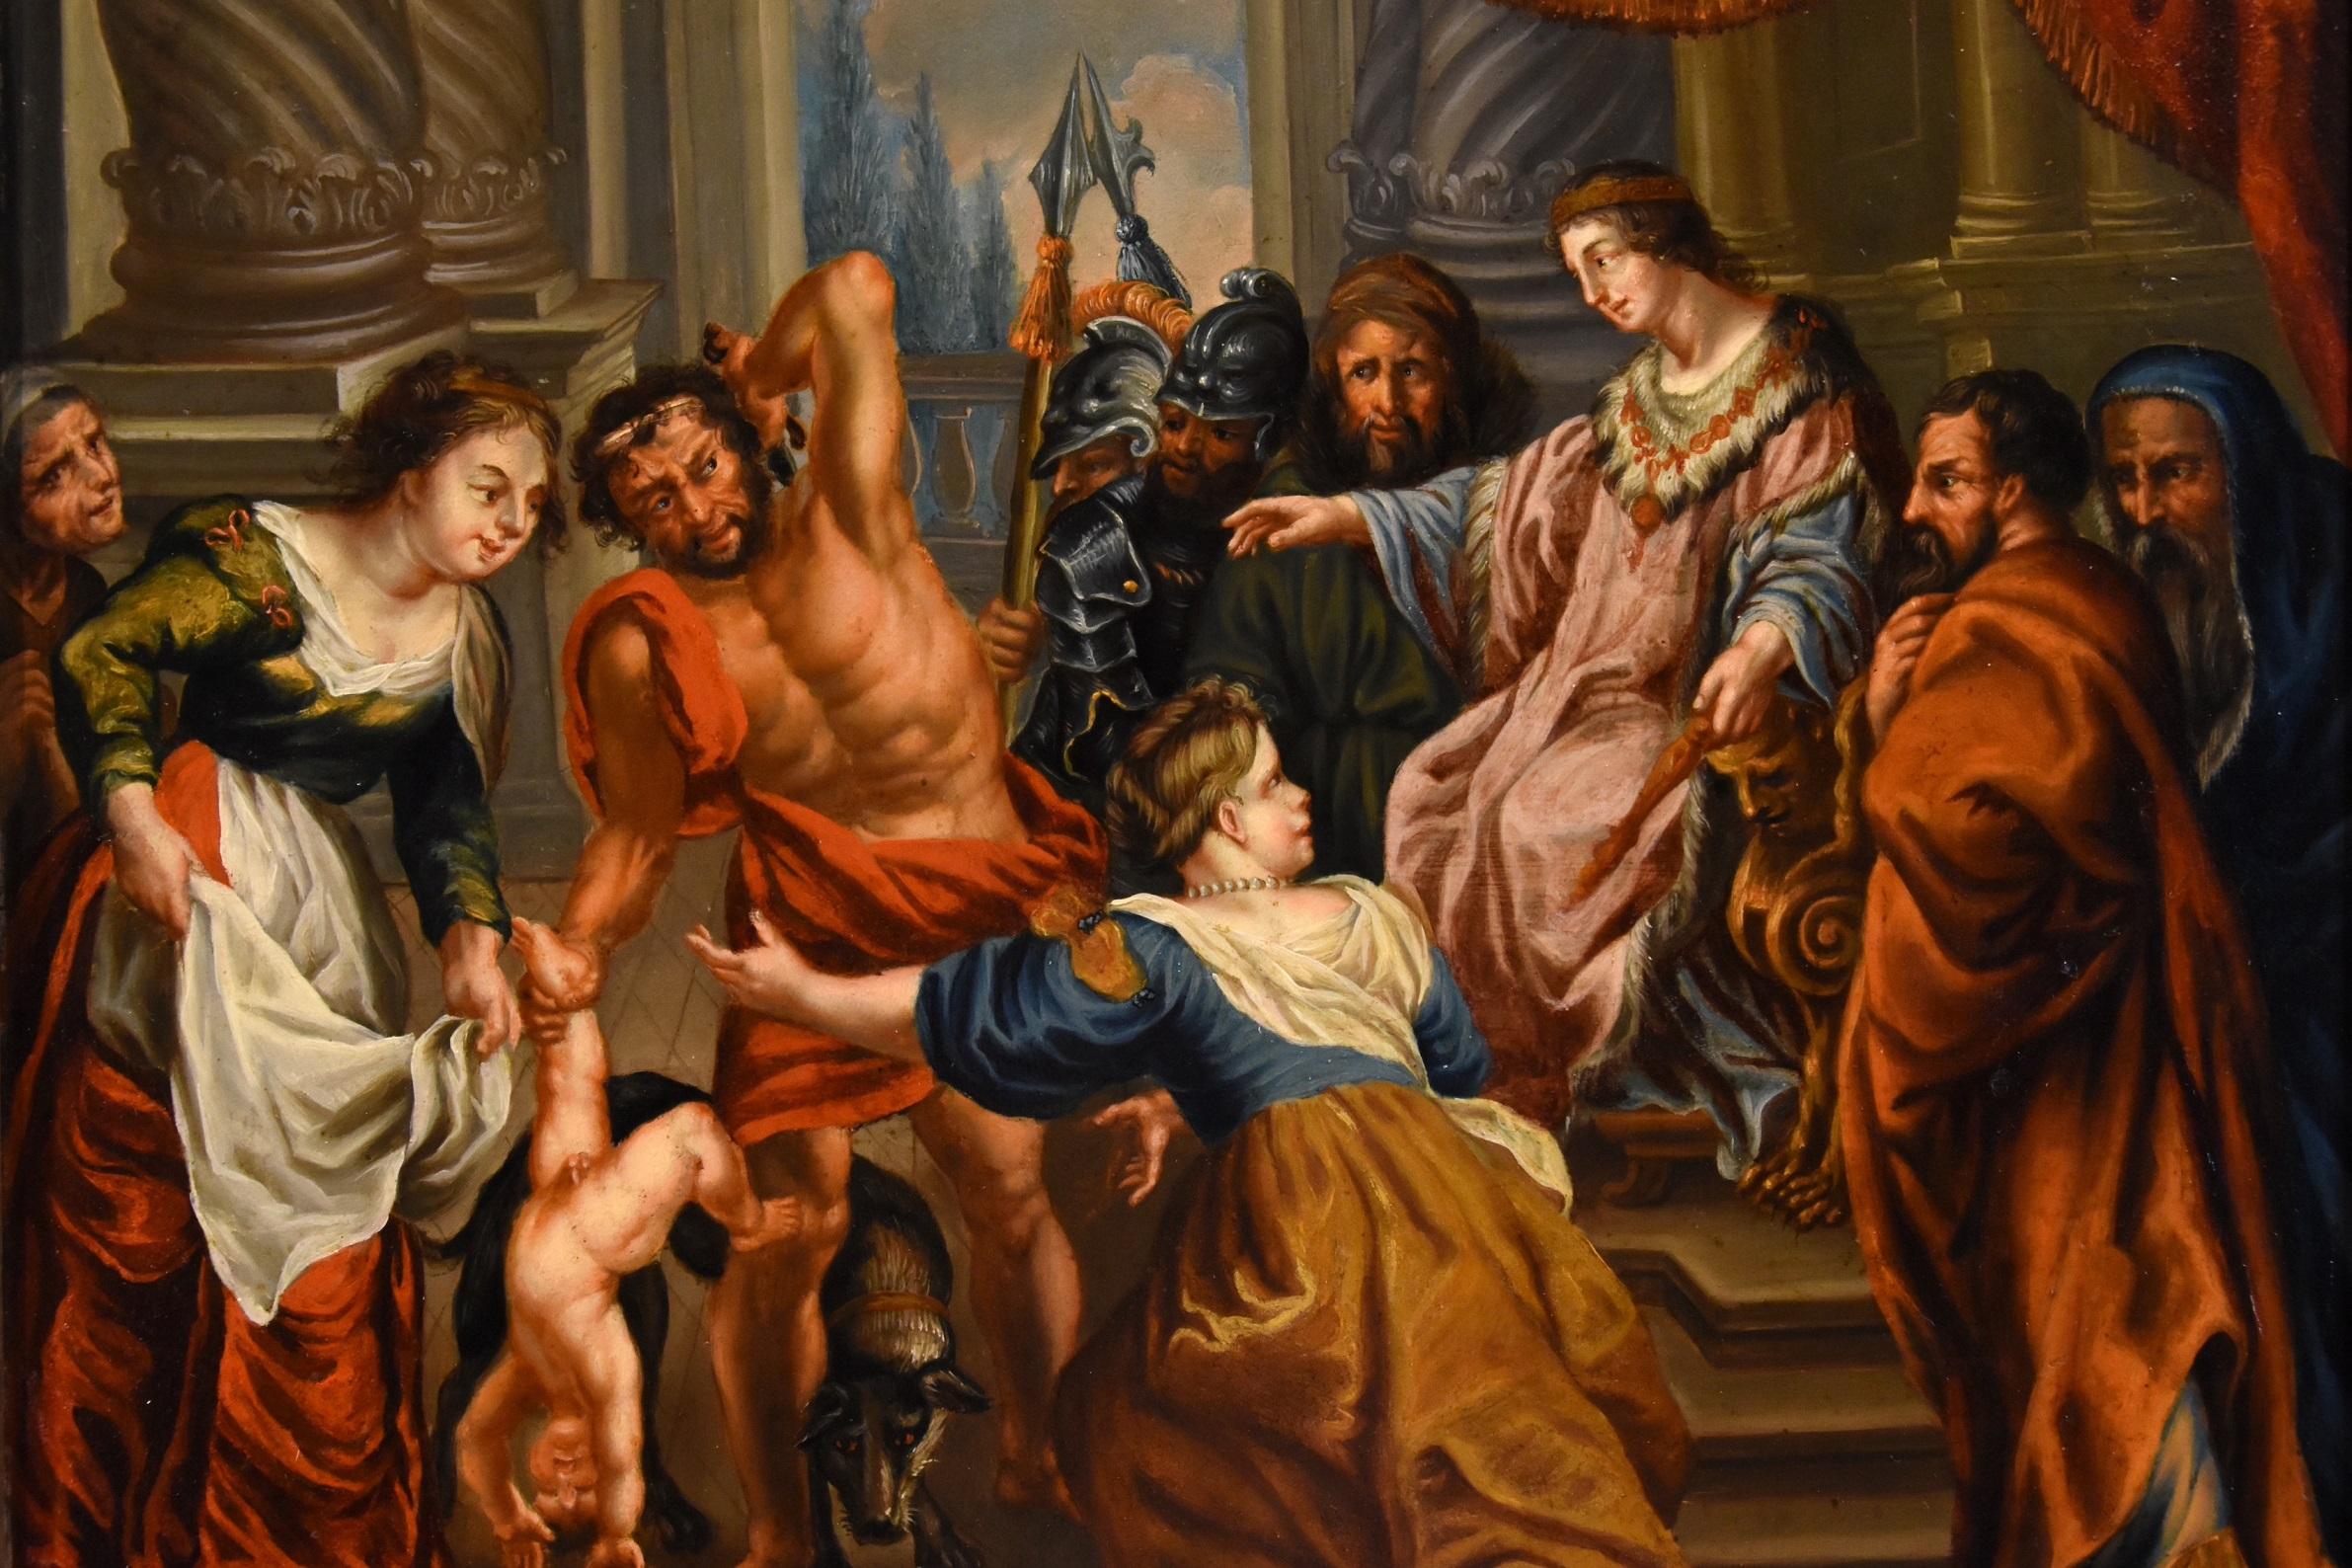 King Solomon Rubens Paint Oil on copper 17th Century Old master Flemish Art For Sale 2